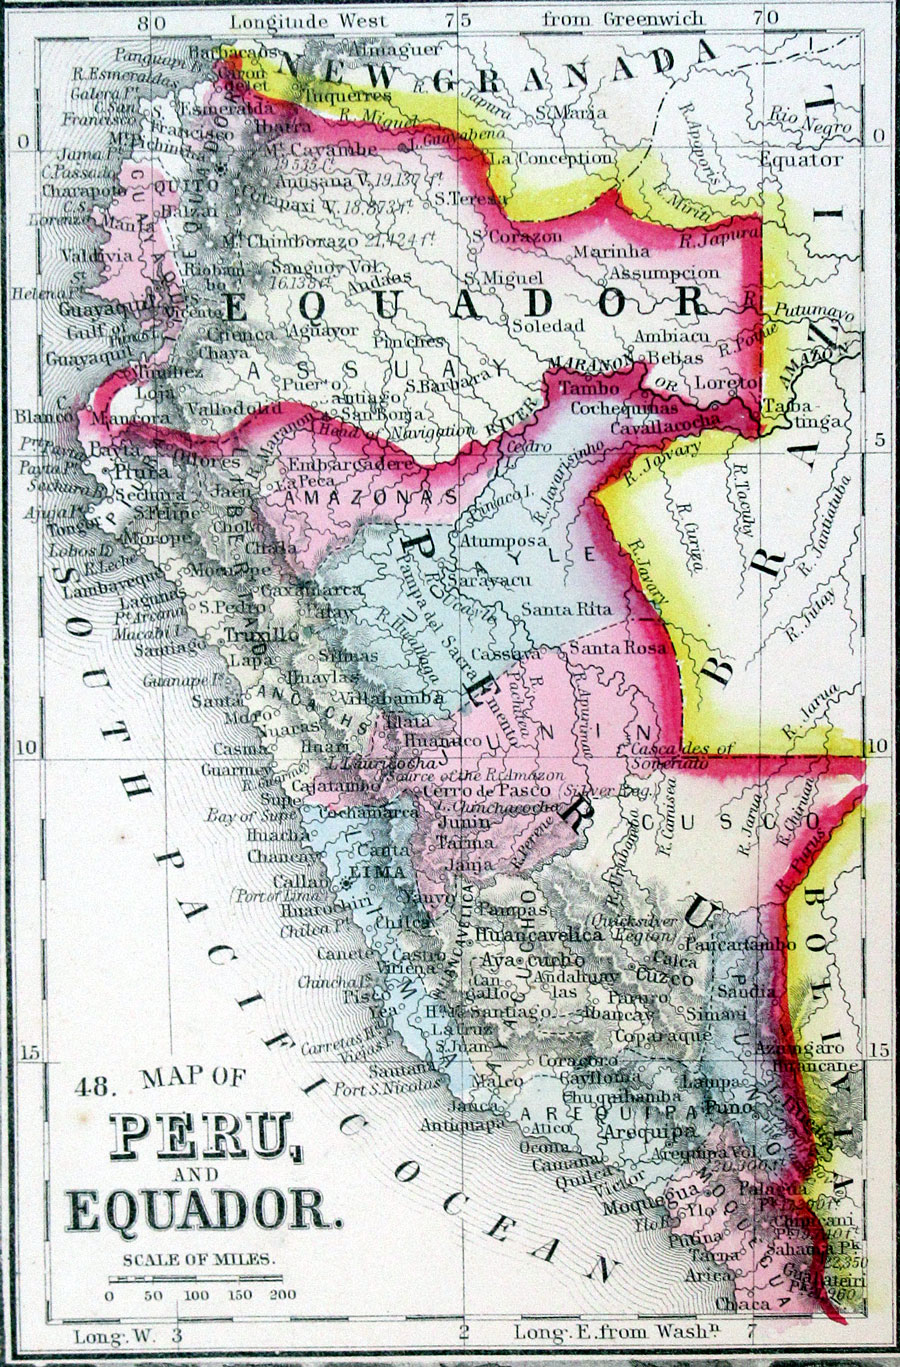 c 1860 Mitchell Map of Venezuela, Peru, Ecuador, Argentina